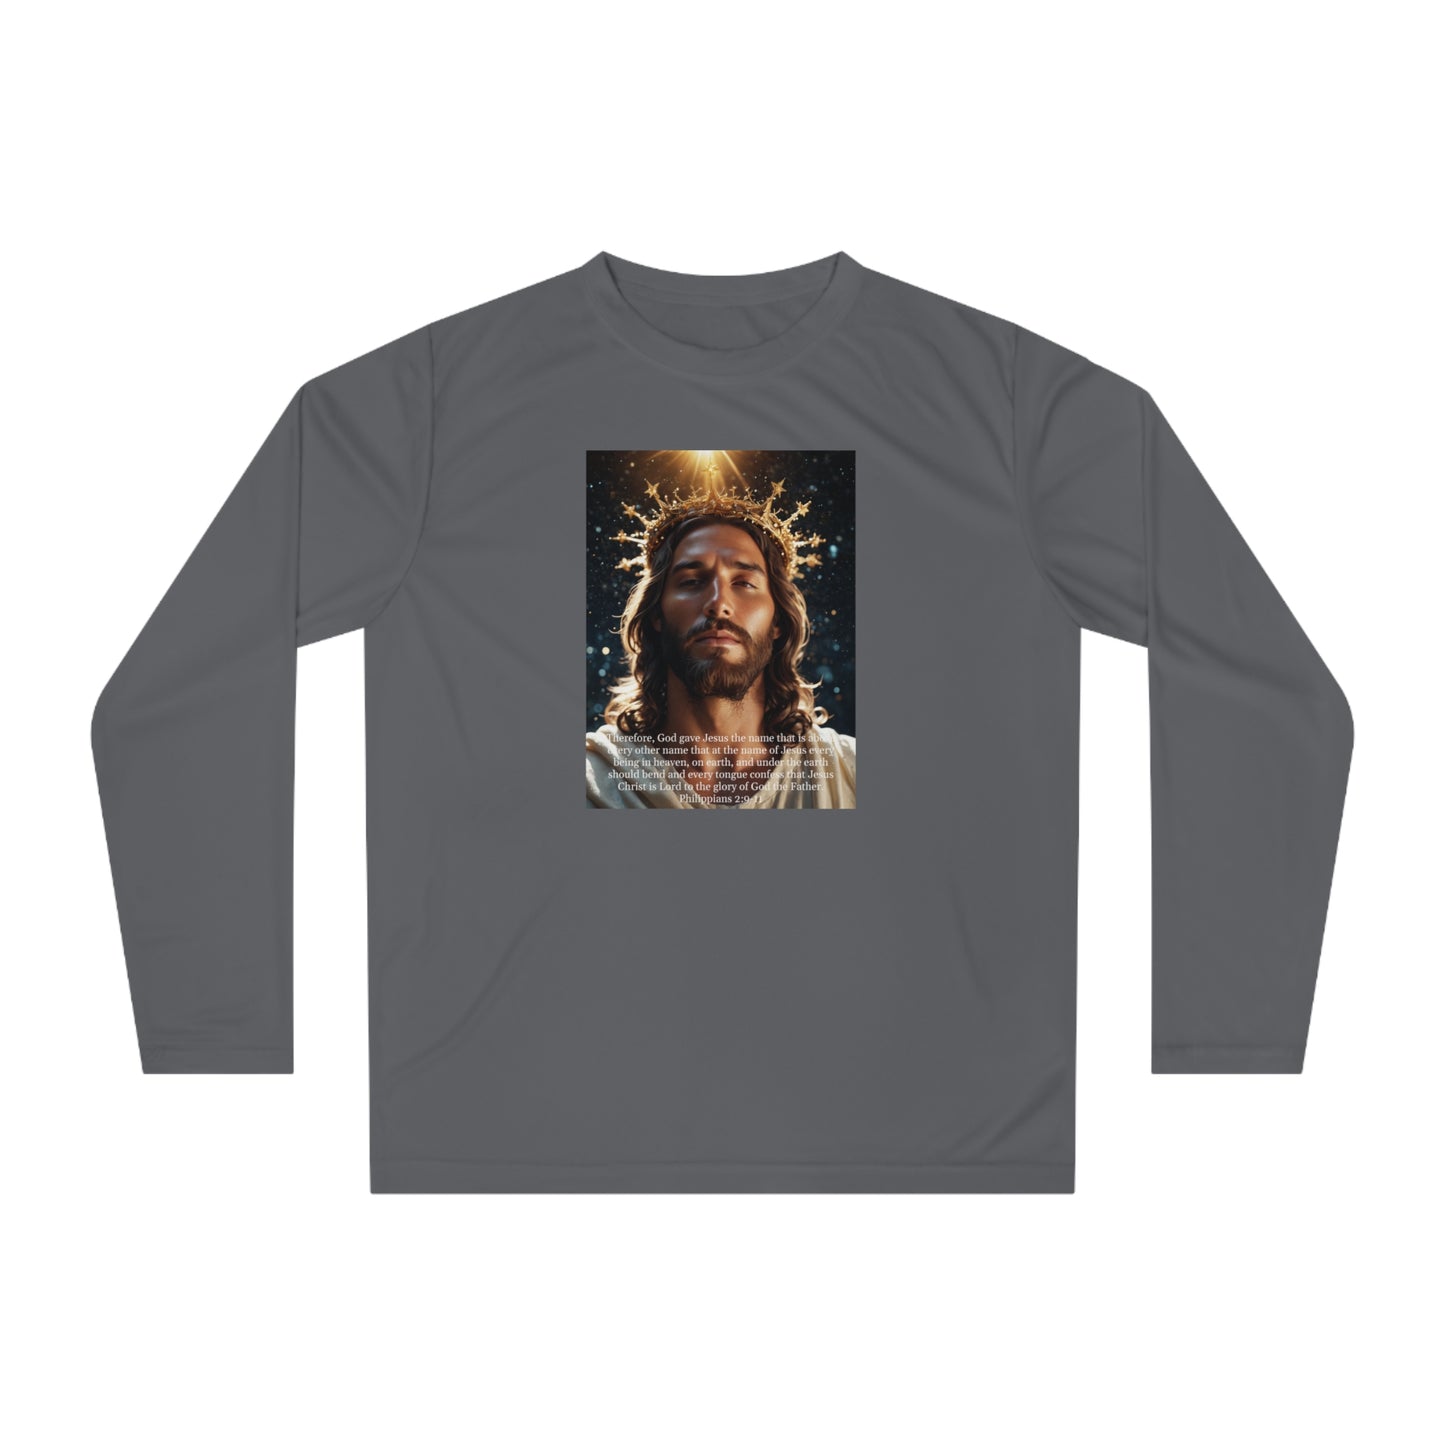 "Jesus Christ is Lord" Unisex Performance Long Sleeve Shirt